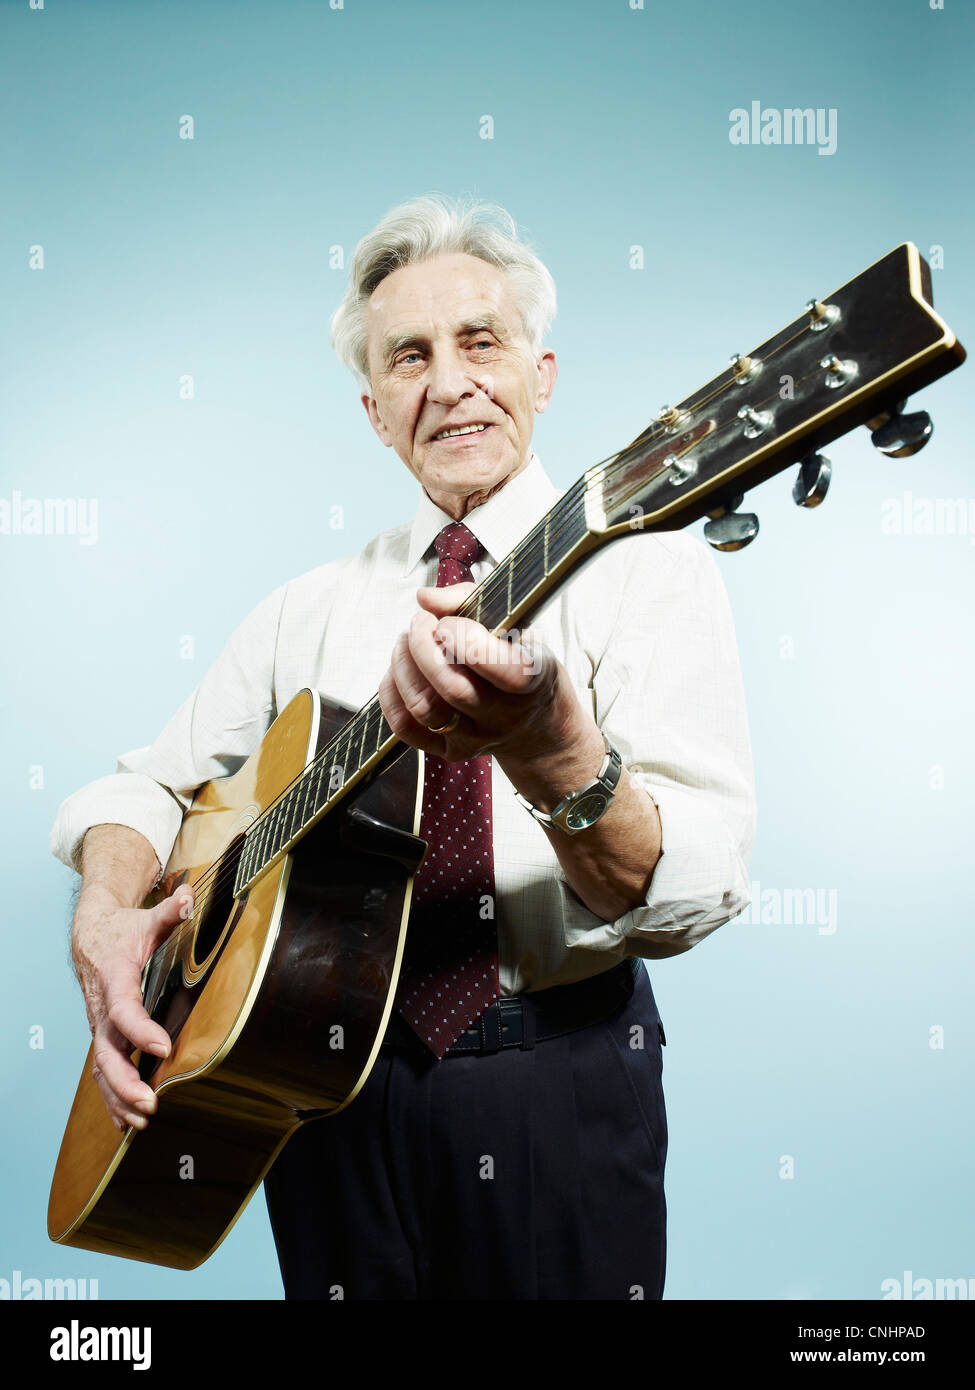 A senior man playing an acoustic guitar Stock Photo